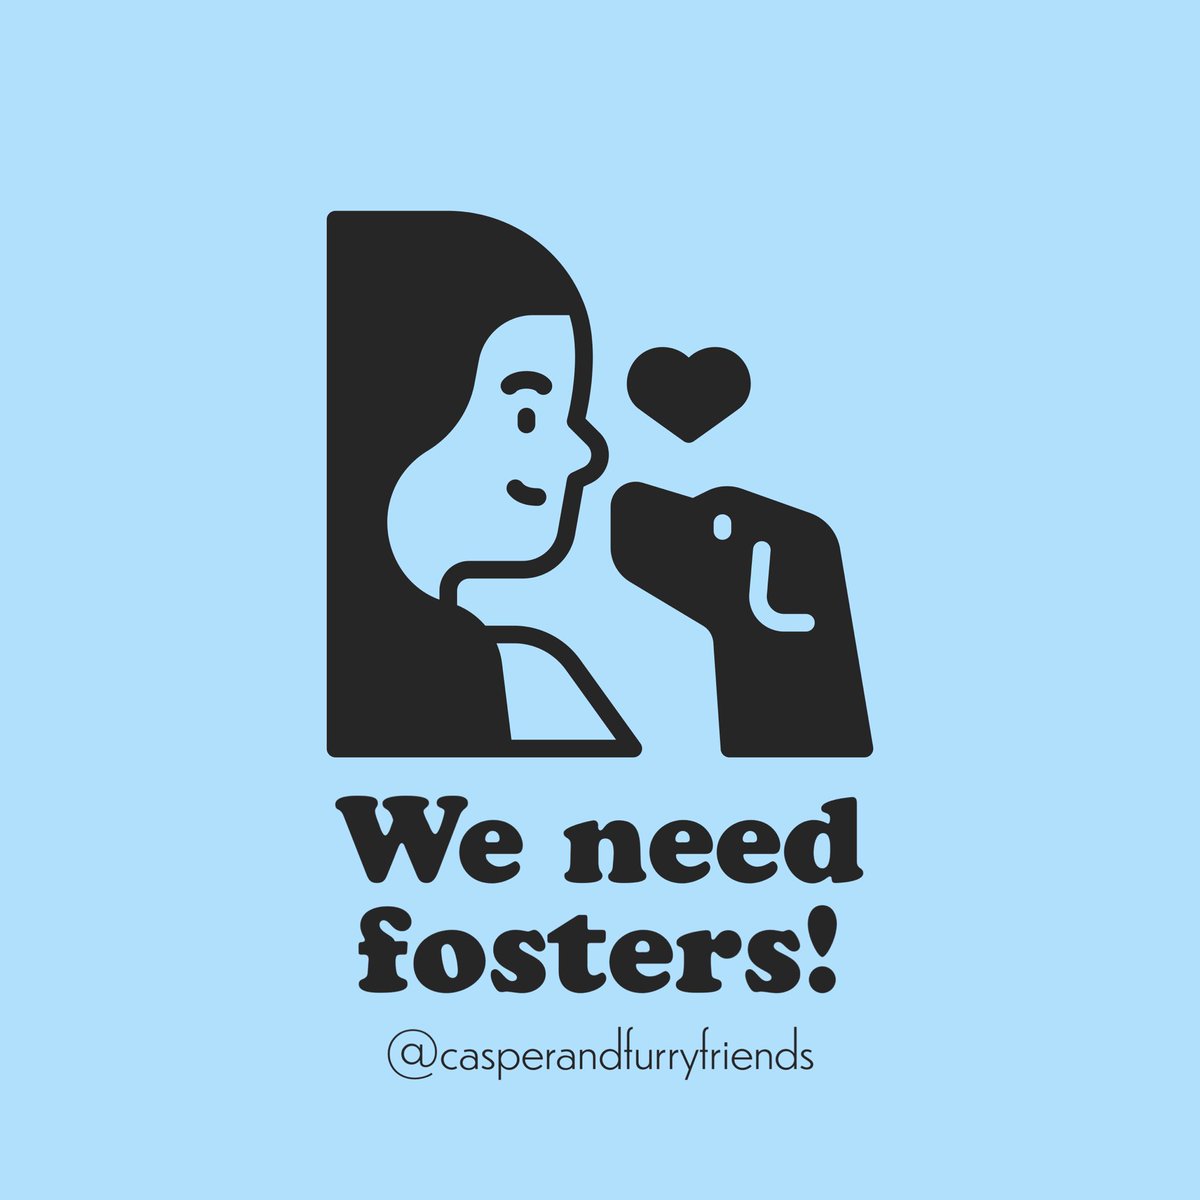 #HoustonTX area -We need fosters! 

🐕🐩🐕‍🦺🦮🐈🐈‍⬛🩵

#fosteradog
#fosteringsaveslives 
#houstondogs
#dogmom
#htx 
#Houston